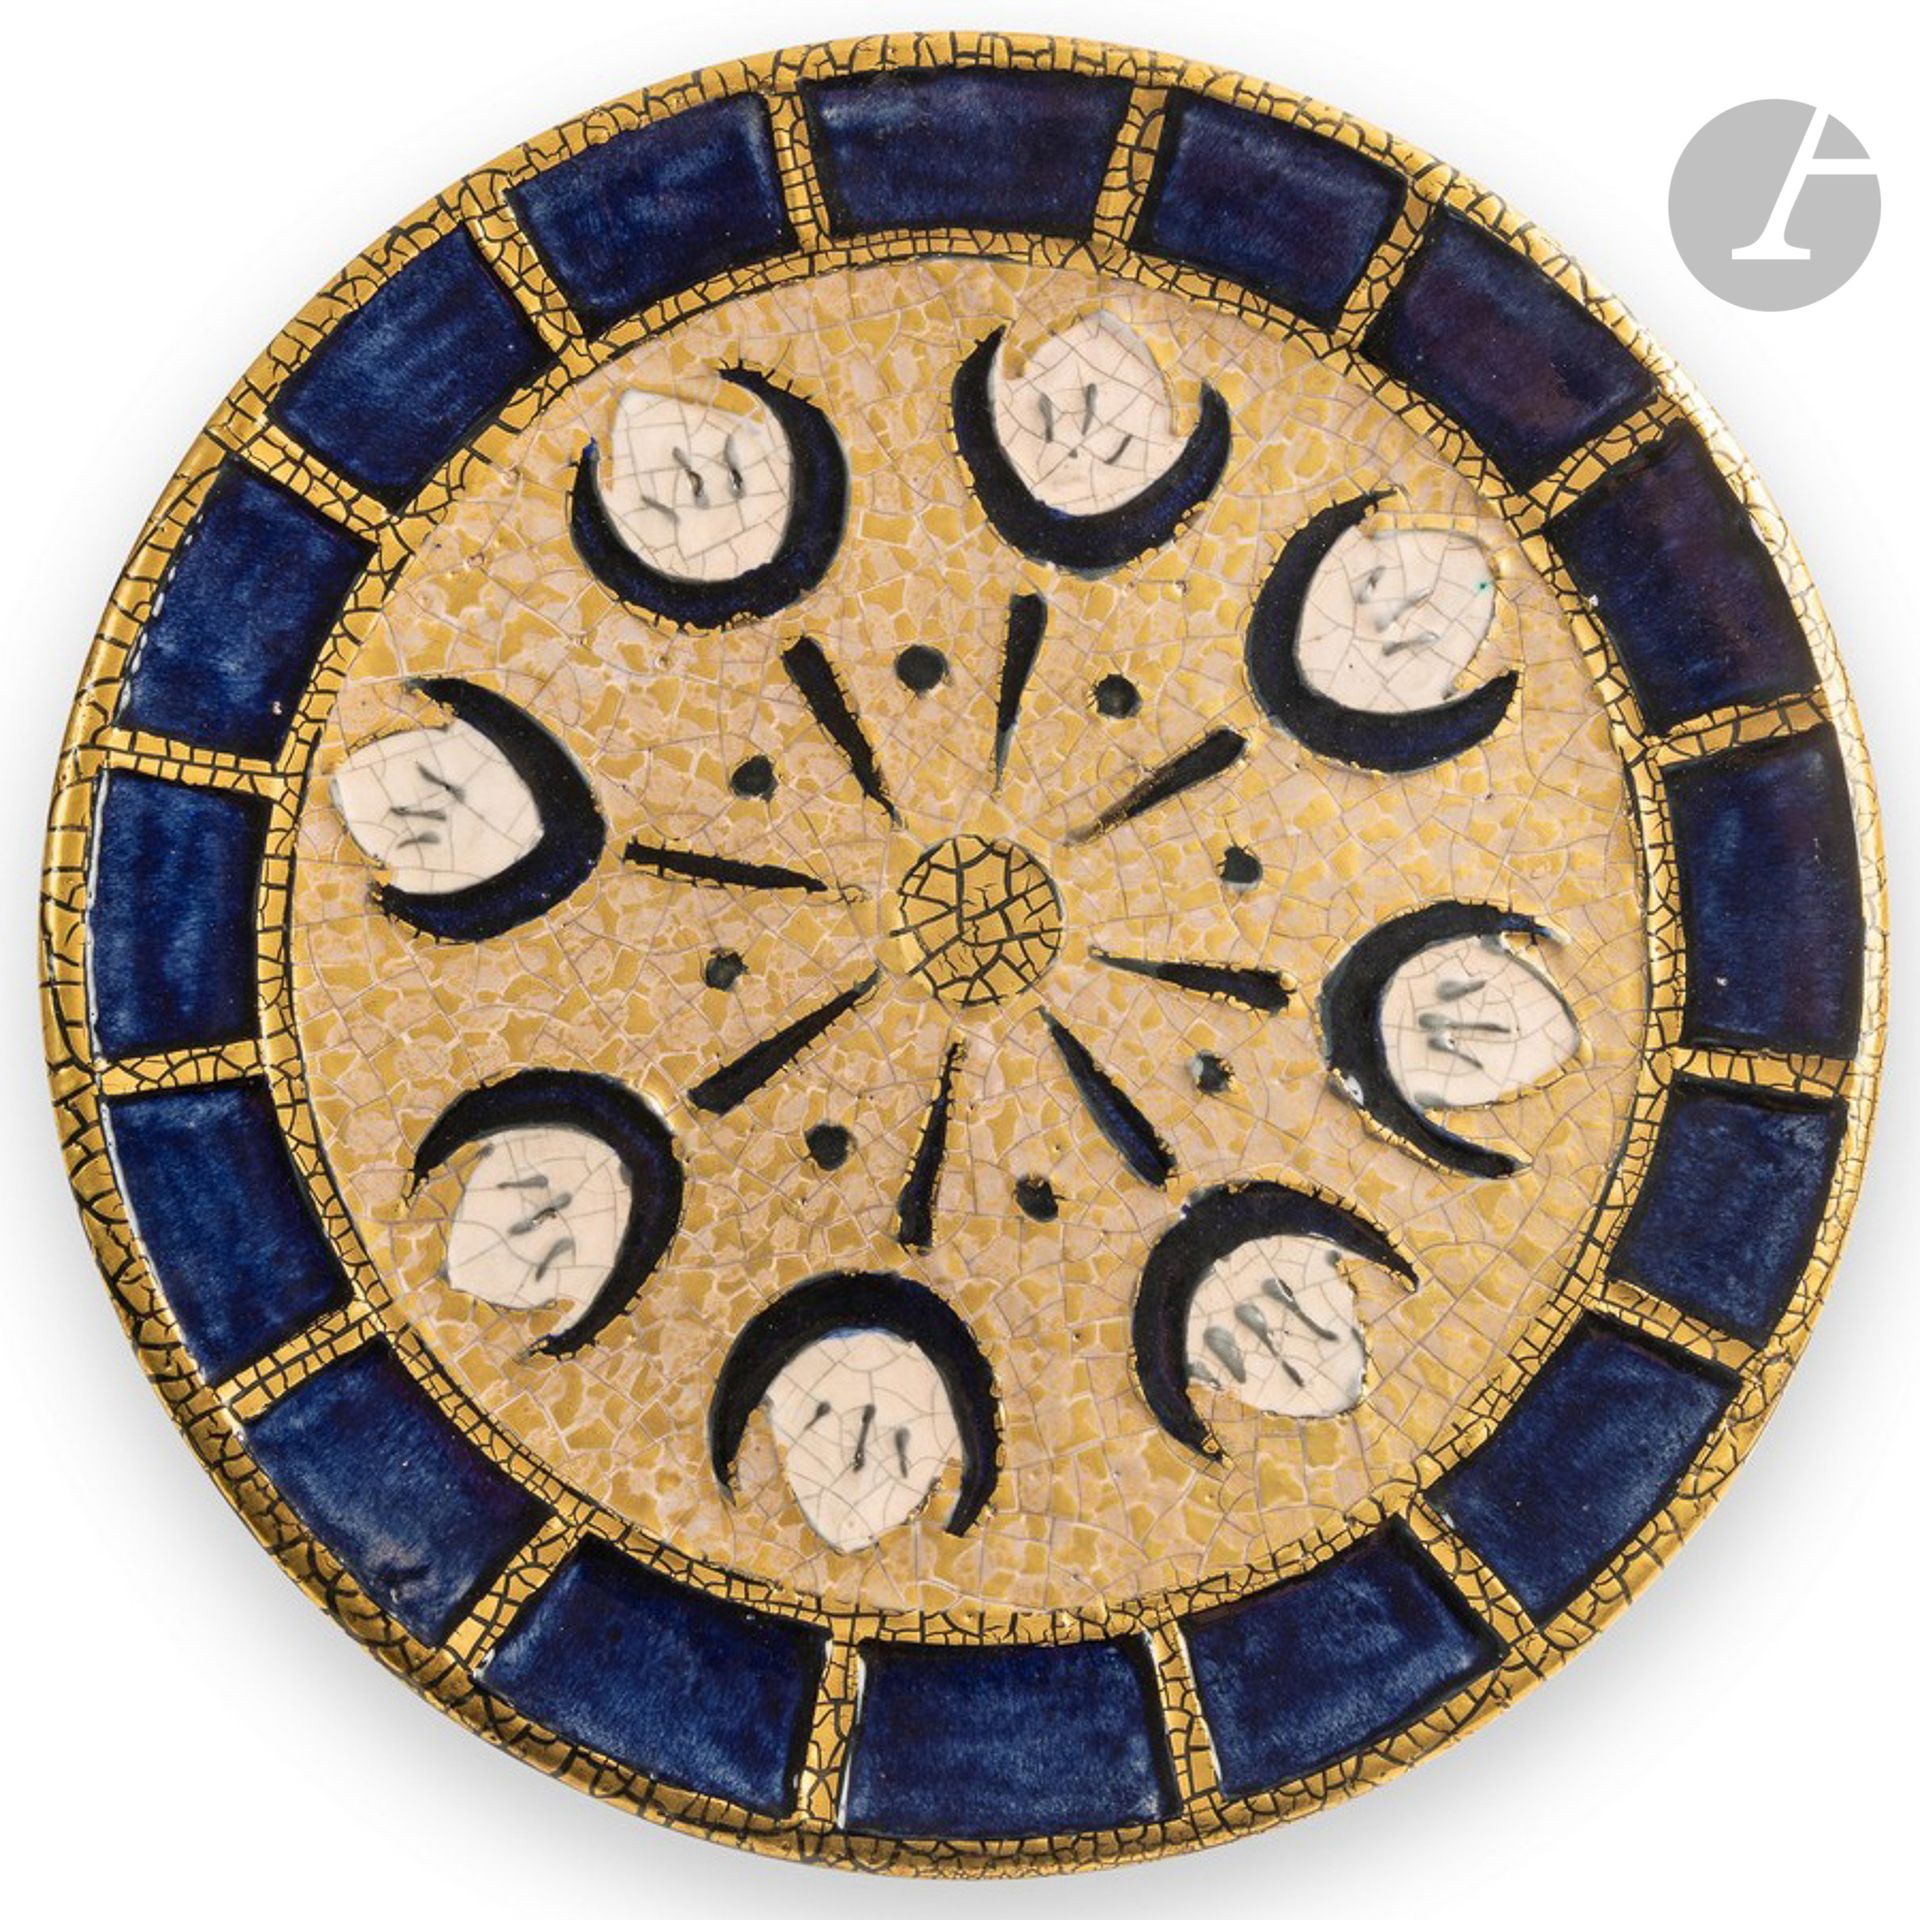 Null ANDRÉ METTHEY (1871-1920)
非常有风格的郁金香和几何图案大
圆盘可悬挂。
多色珐琅彩陶瓷证明；装饰（花卉和几何图形）和周边都有&hellip;